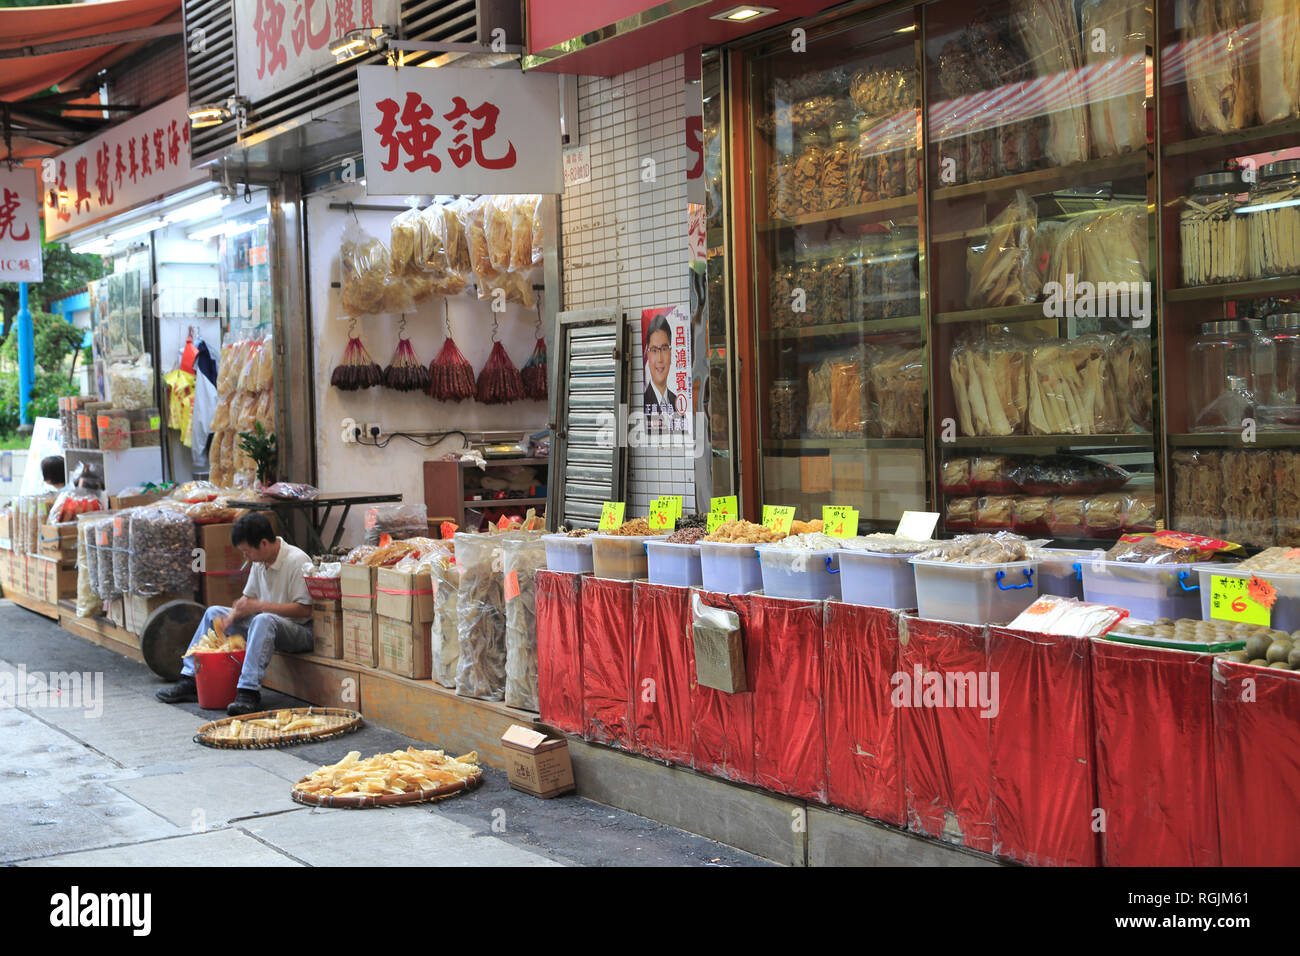 Magasins de vente de médicaments chinois, des herbes, du poisson séché, Sheung Wan, Hong Kong Island, Hong Kong, Chine, Asie Banque D'Images